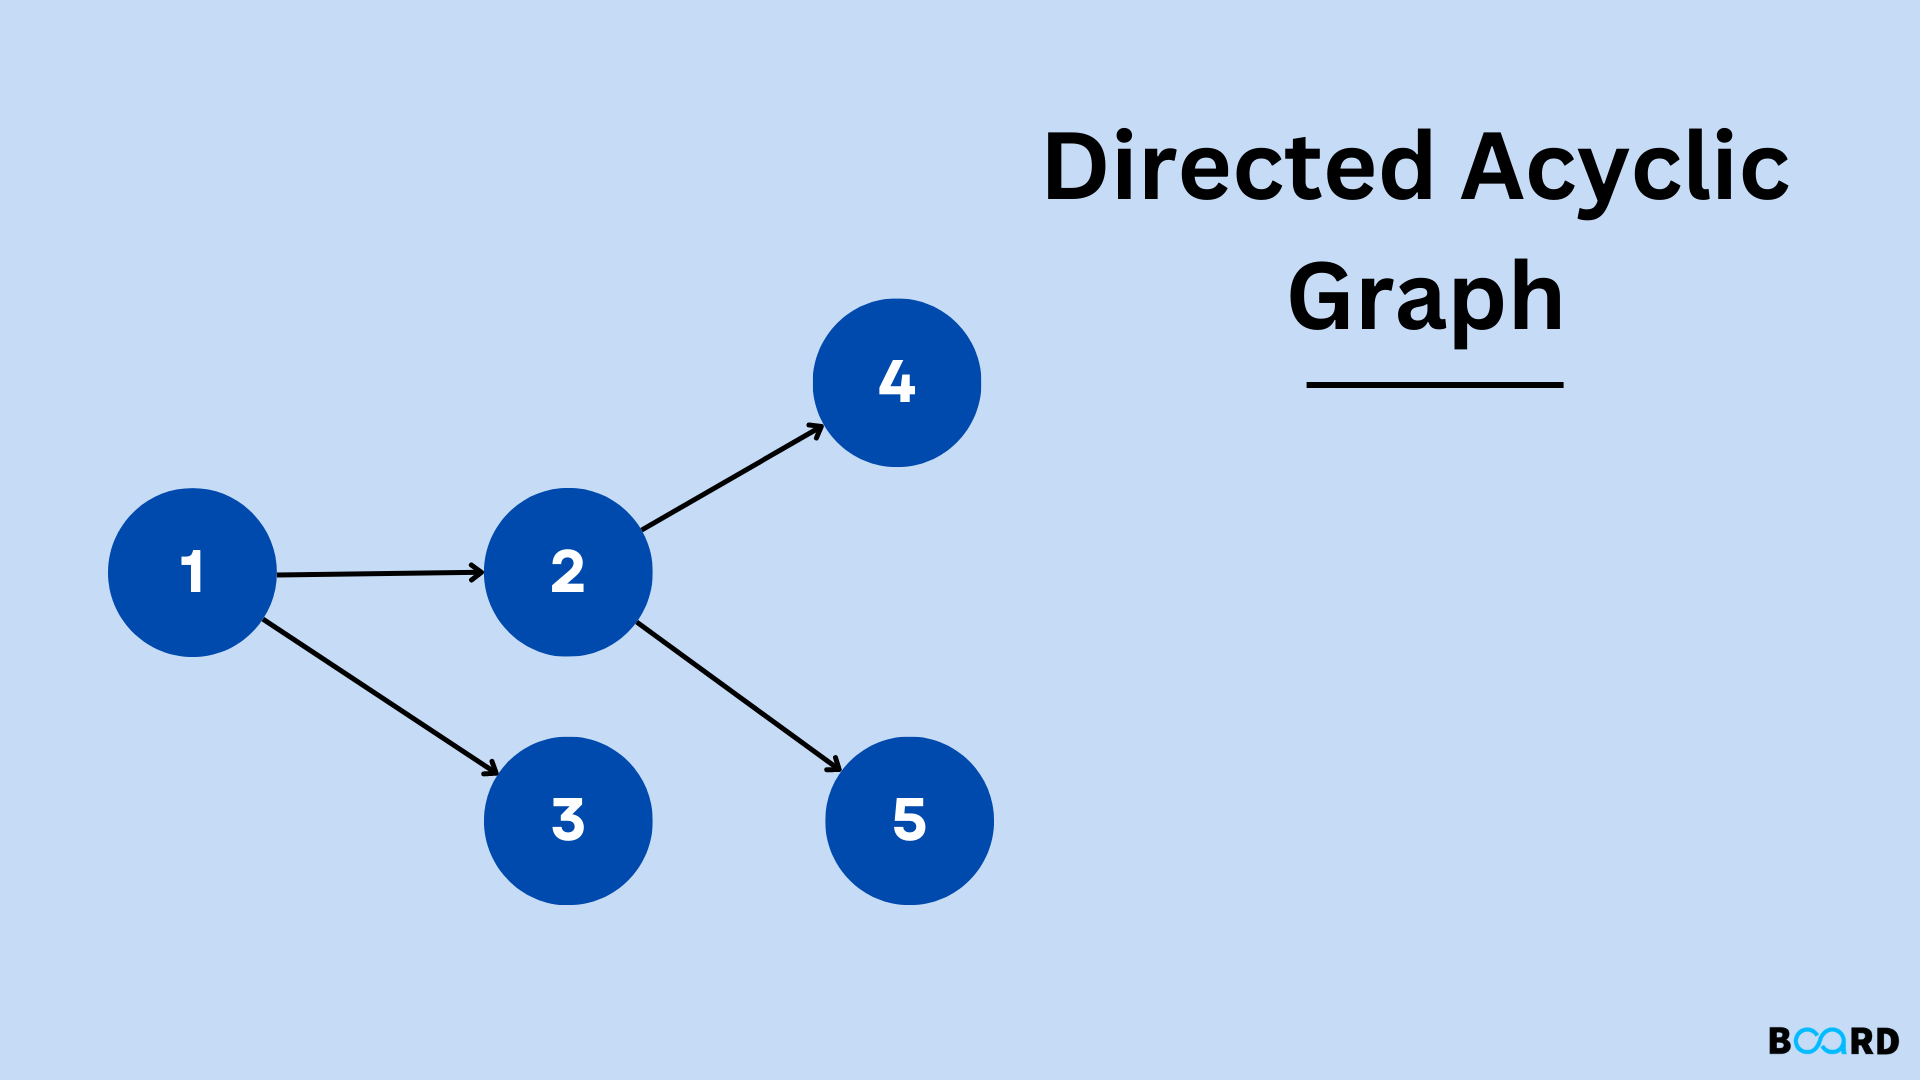 Directed Acyclic Graph: Representation